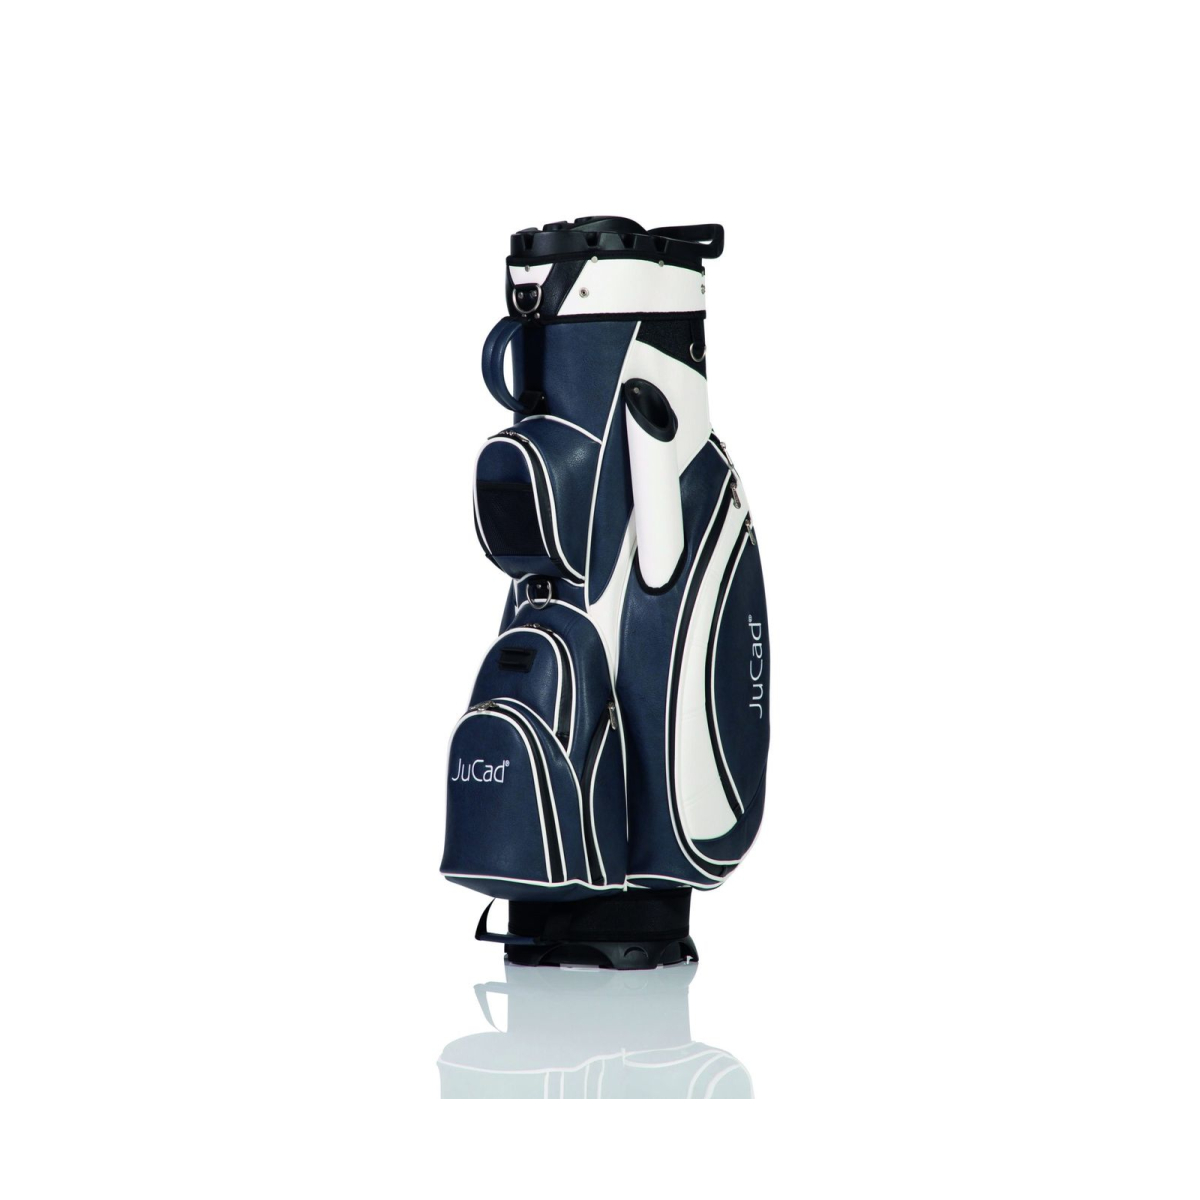 JuCad Bag Manager Plus I Golfbag I Trolly I Golftasche I Schirmfach I, 296,49 €